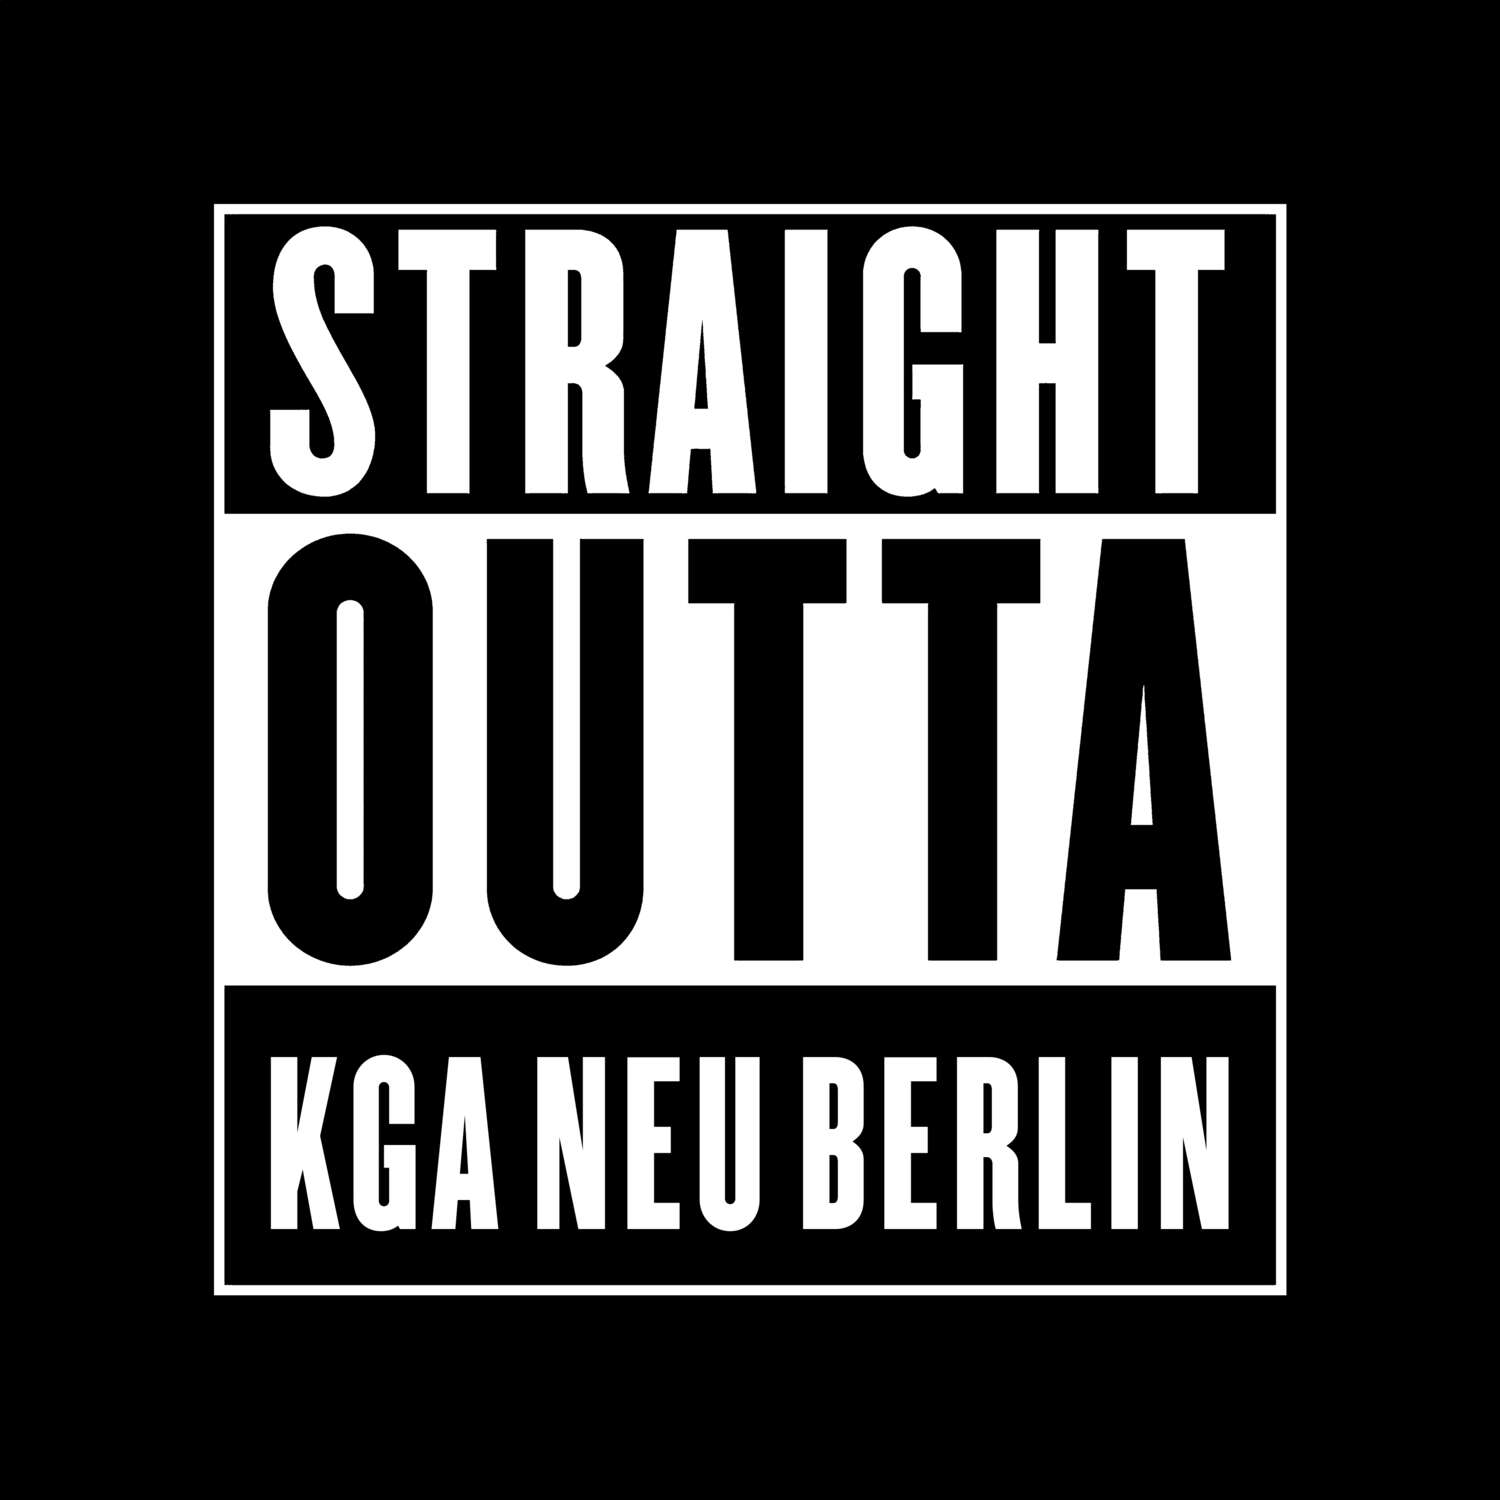 KGA Neu Berlin T-Shirt »Straight Outta«